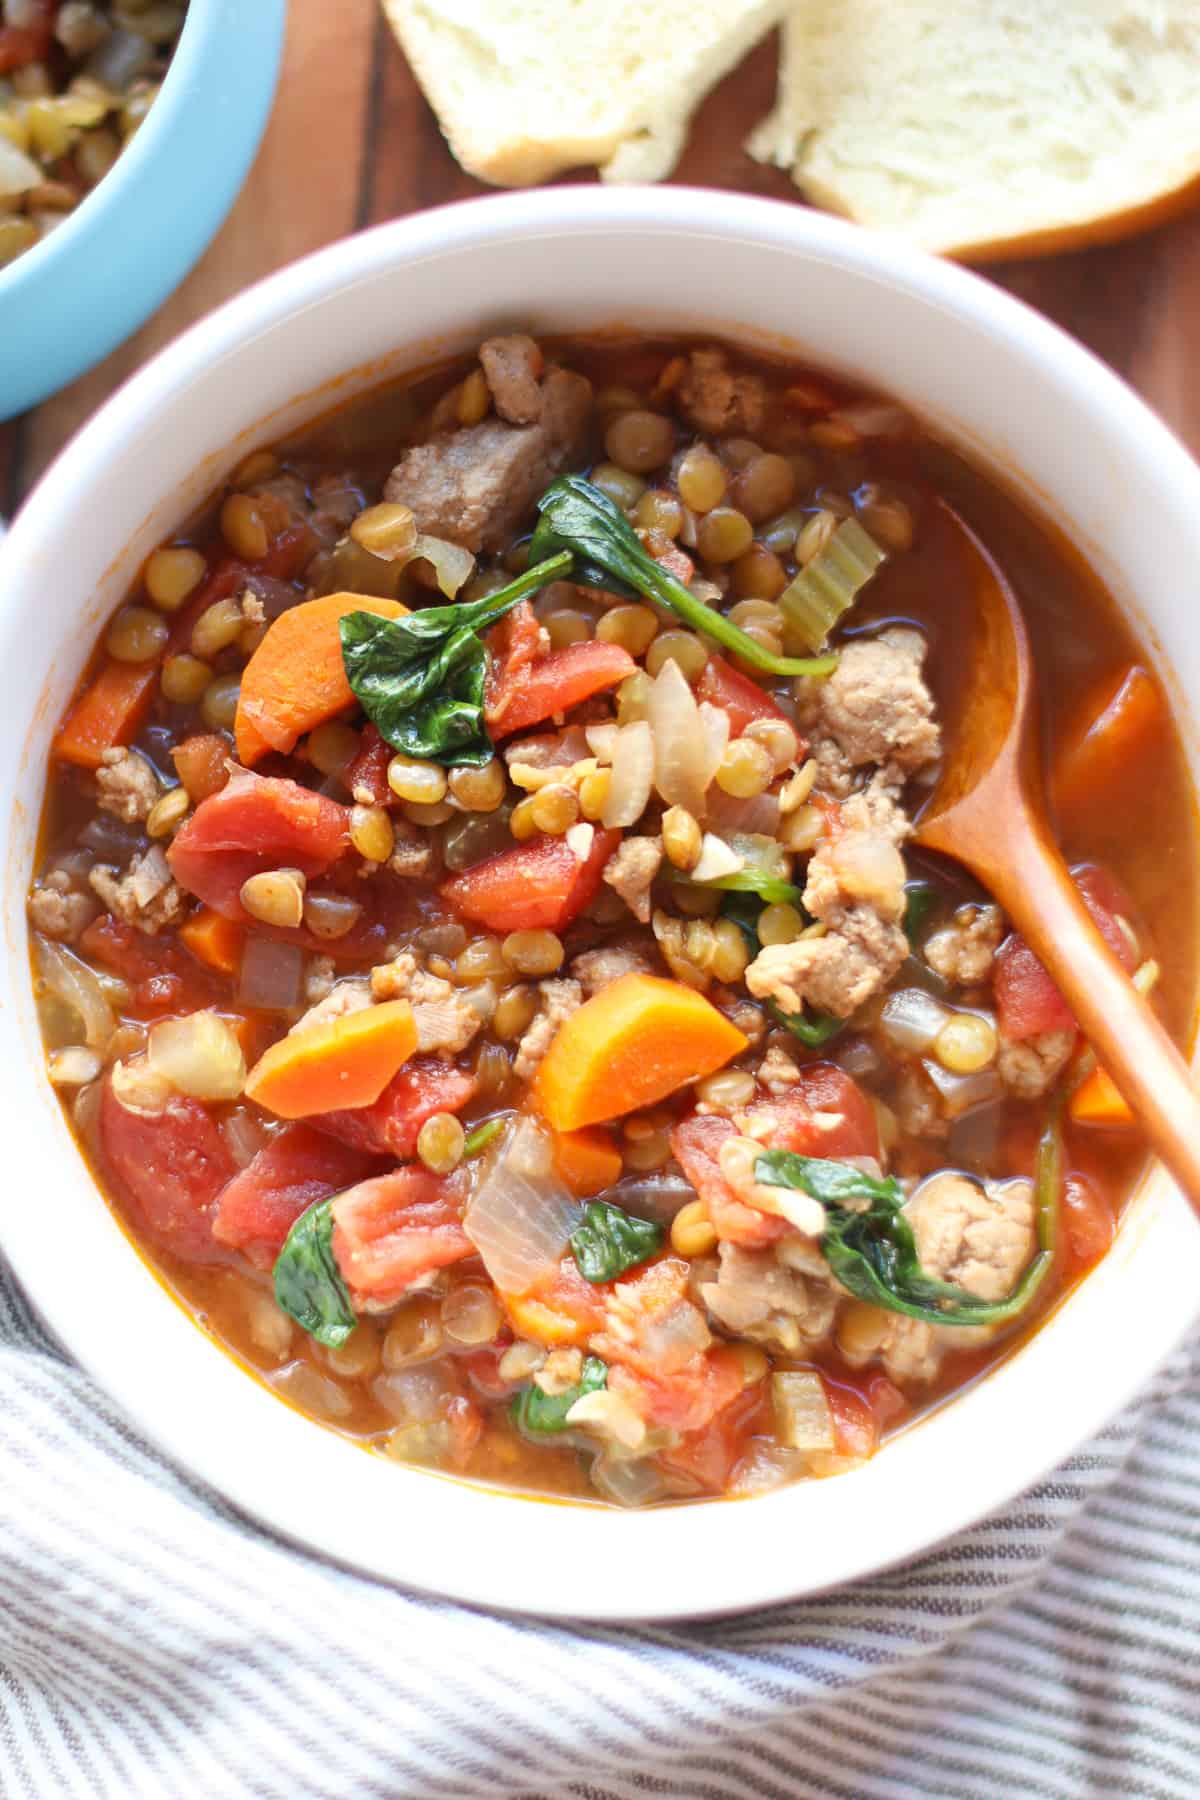 https://www.mjandhungryman.com/wp-content/uploads/2015/11/Turkey-lentil-soup.jpg